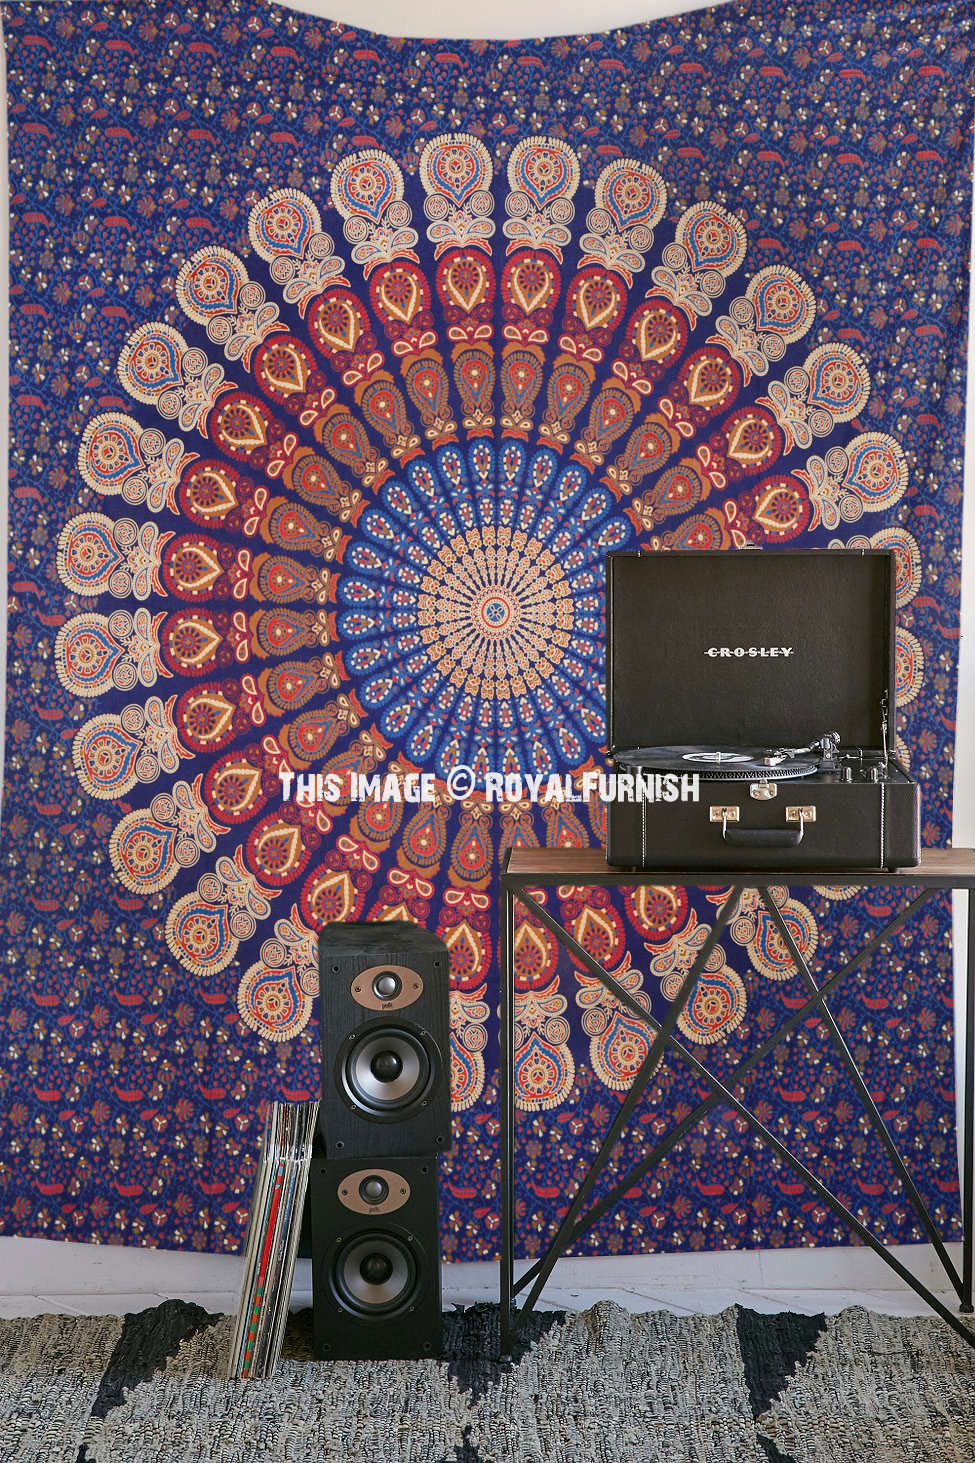 Mandala Bohemian Round Beach Hippie Tapestry Throw Yoga Mat Towel Indian Blanket